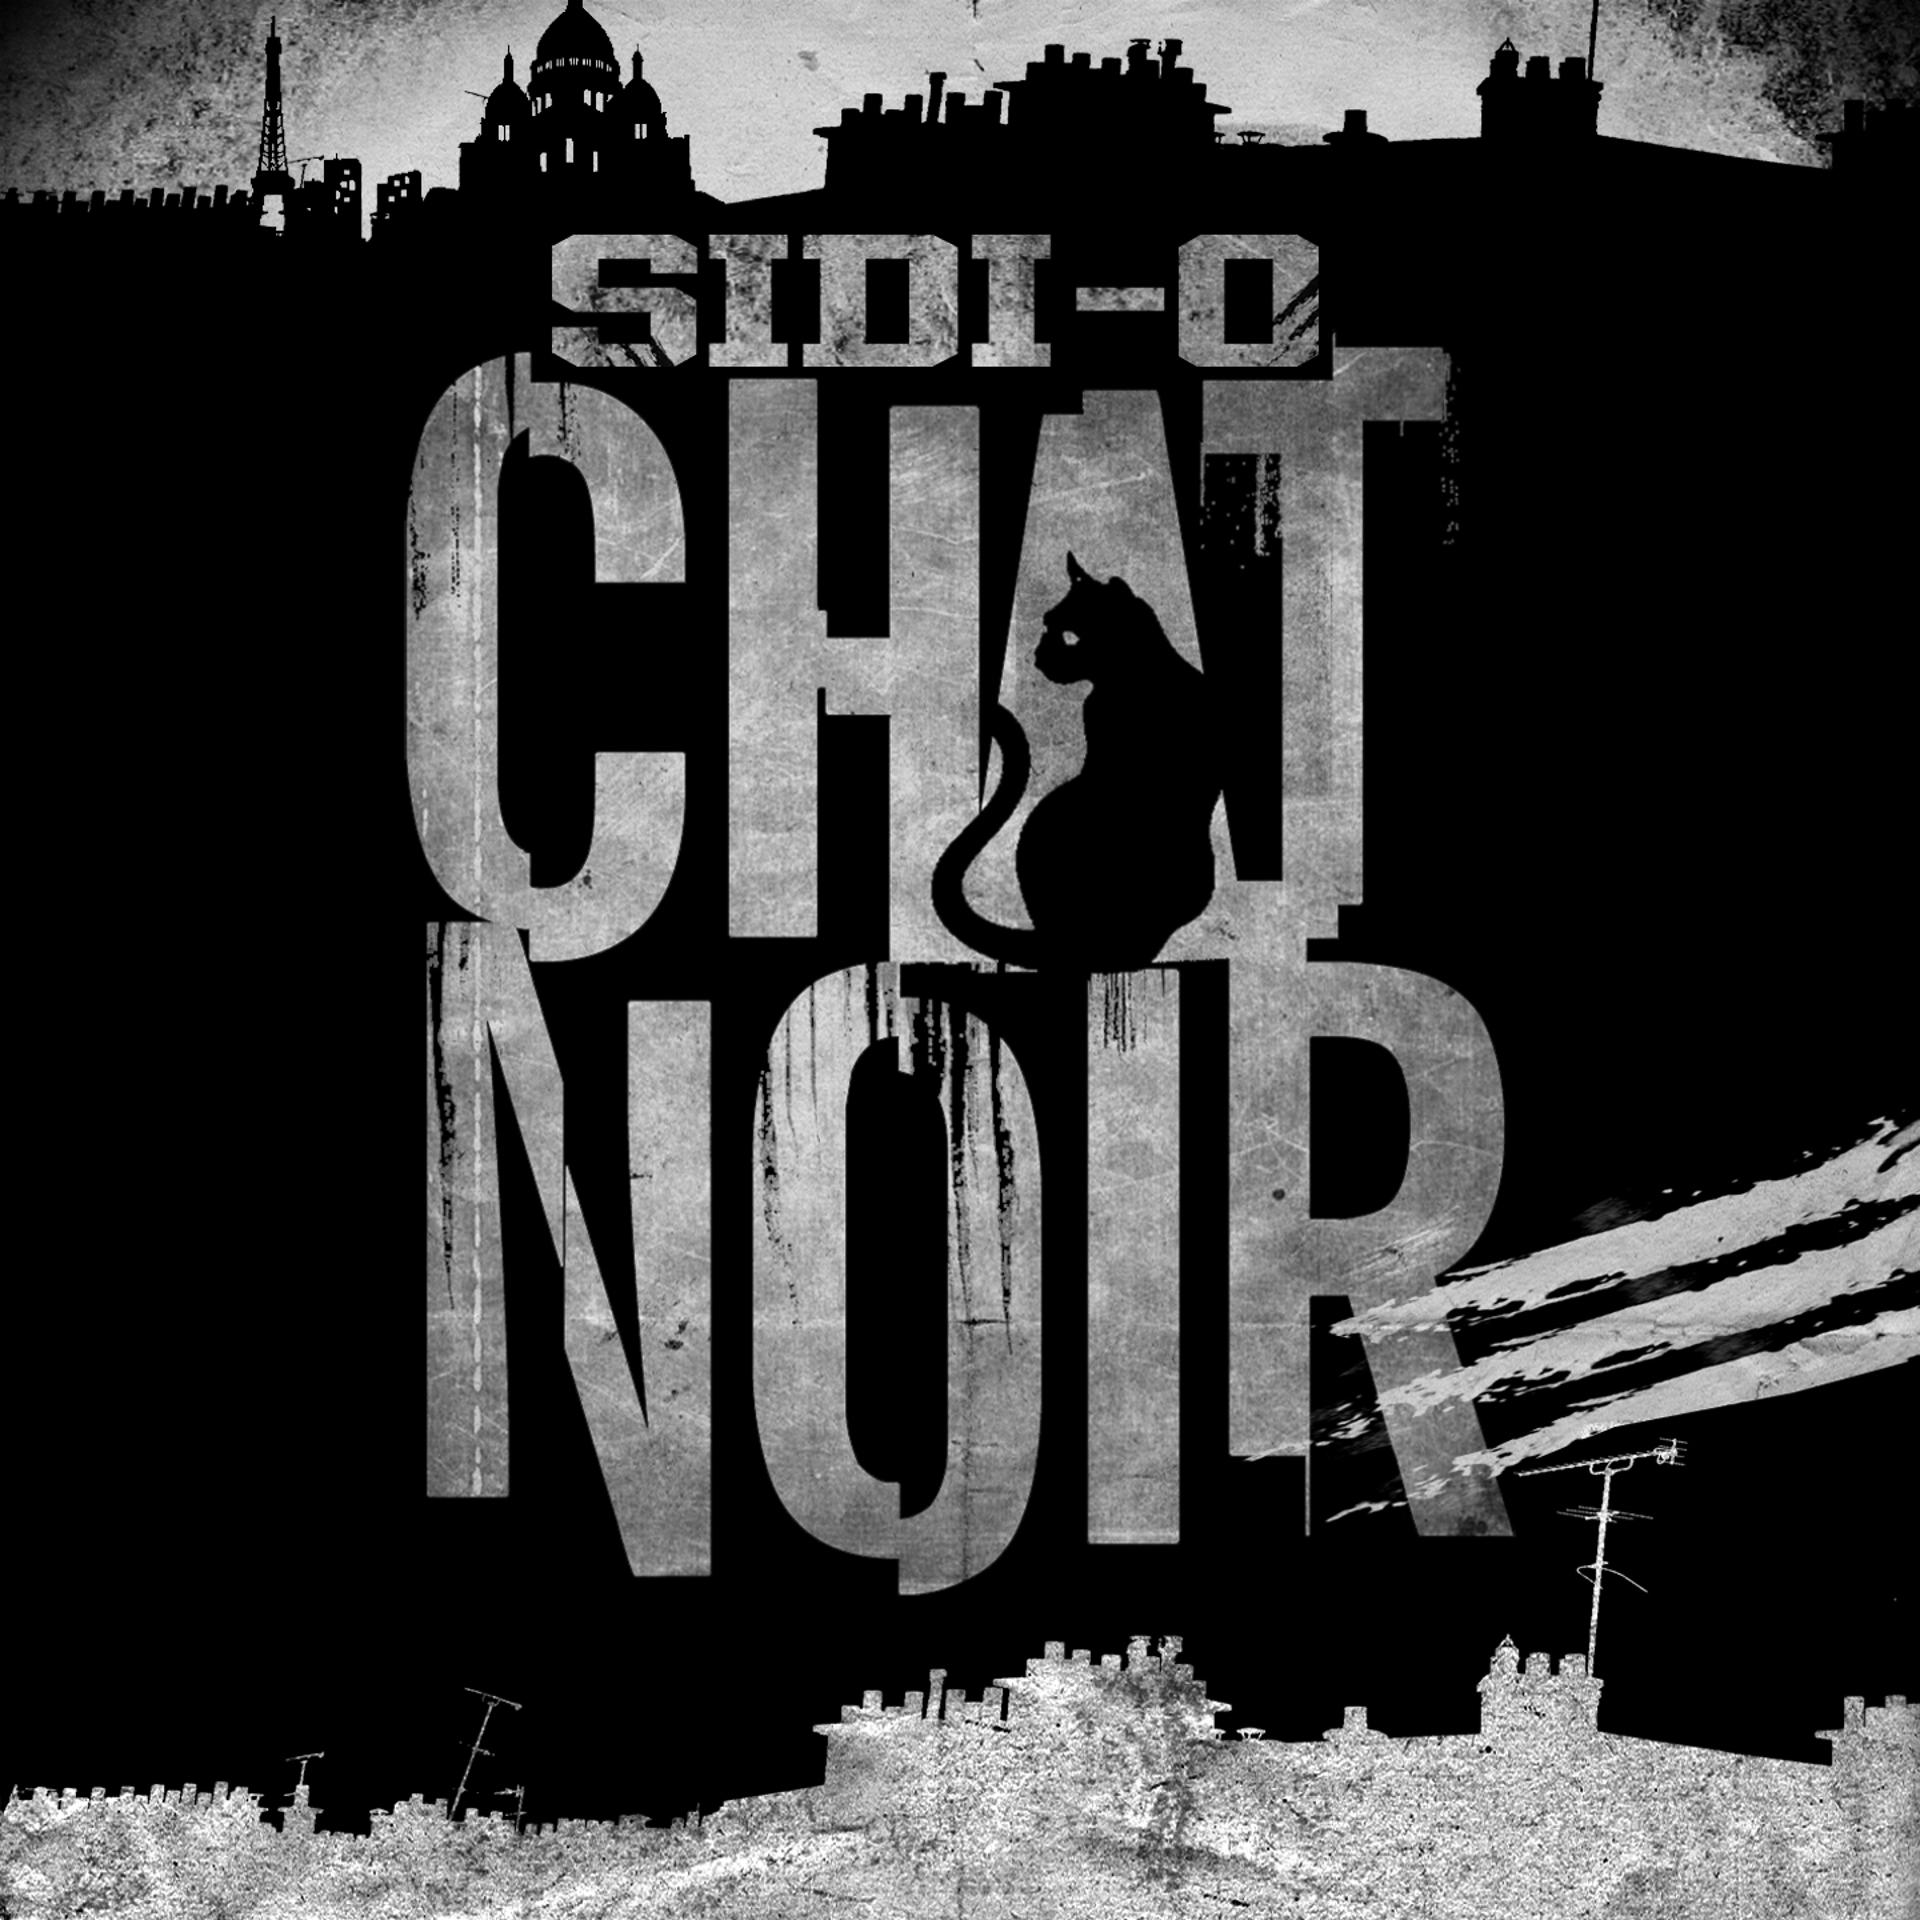 Постер альбома Chat noir